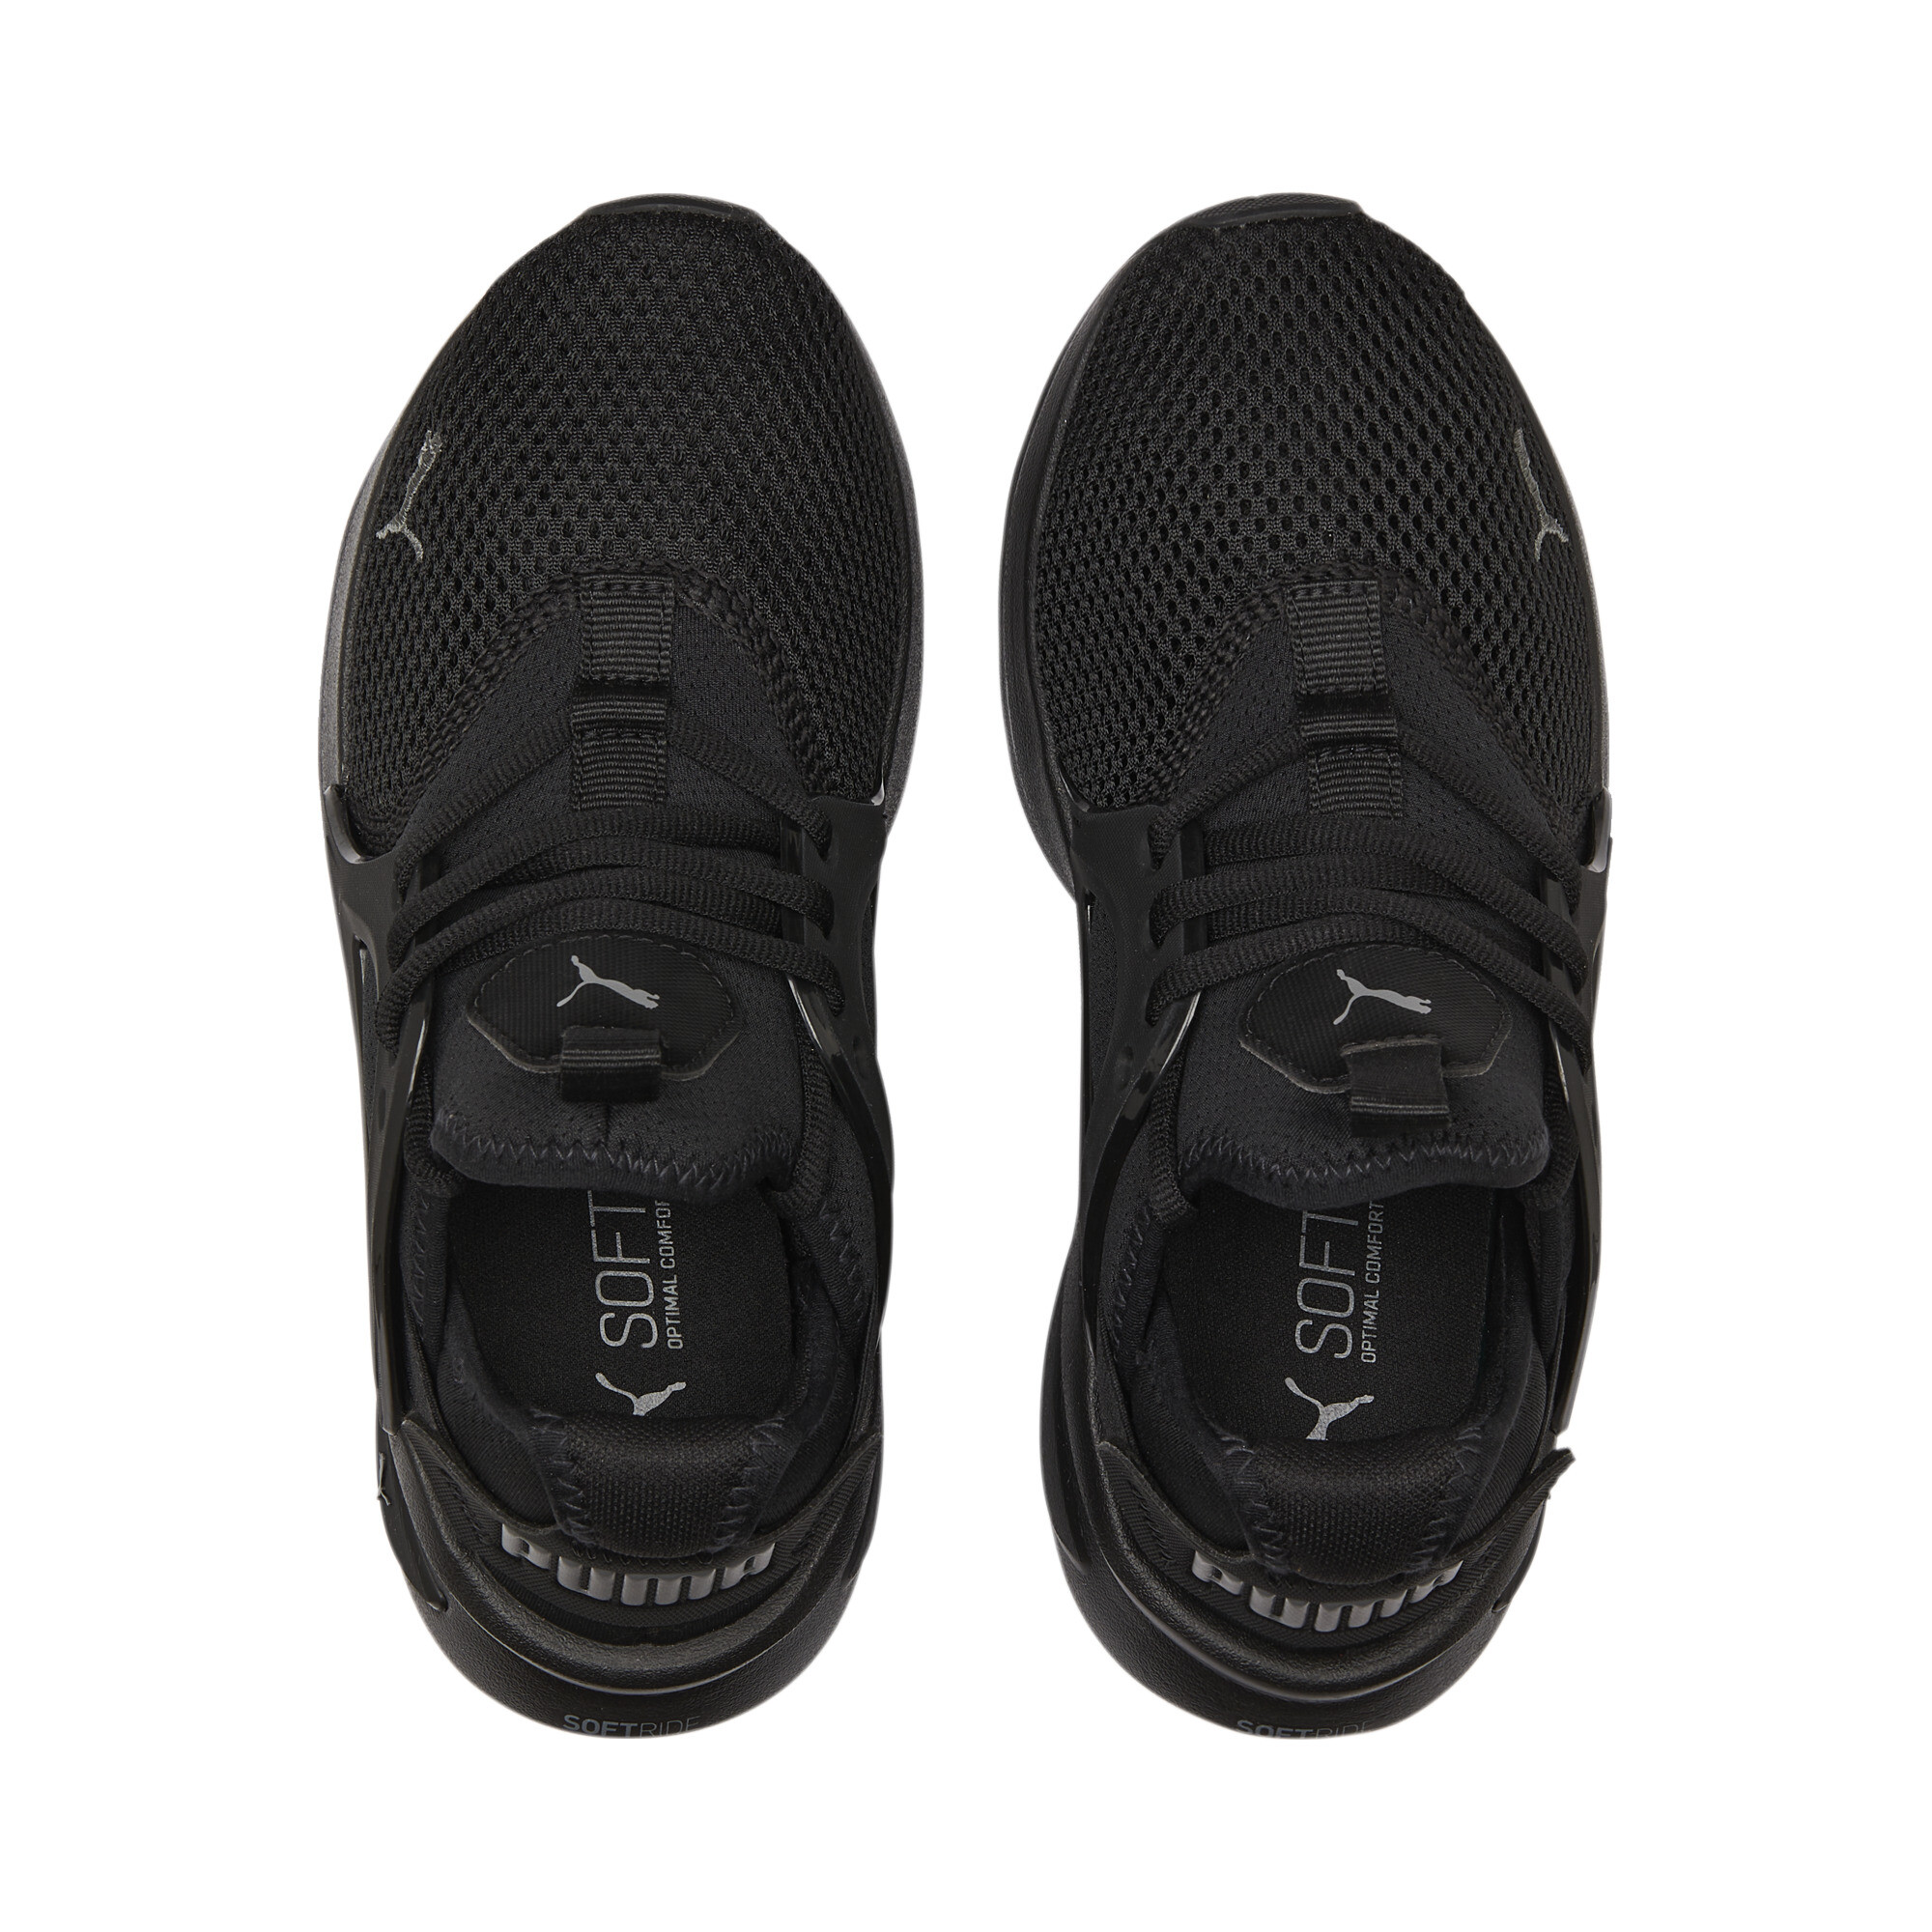 PUMA Softride Enzo Evo Sneakers Youth In Black, Size EU 38.5